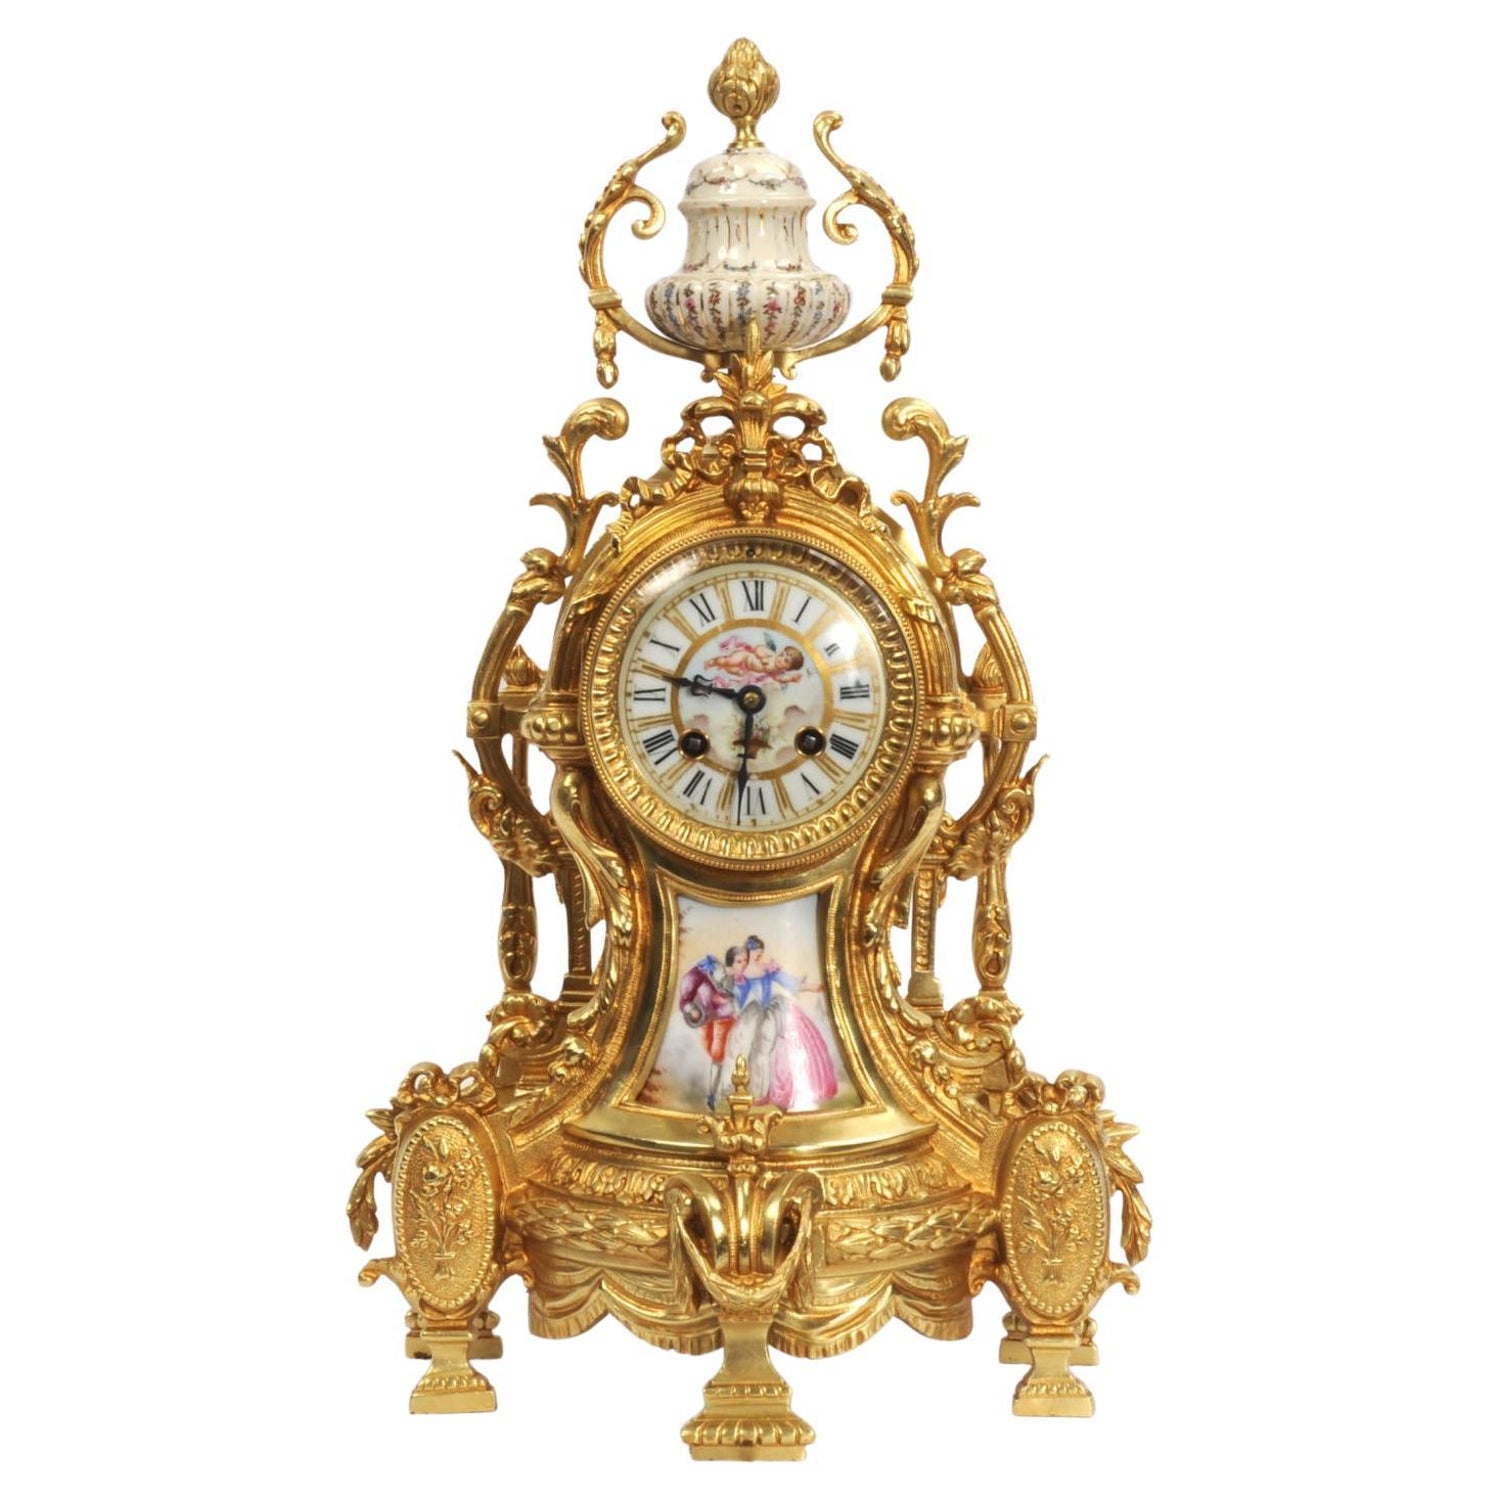 A.D. Mougin - Designer Biography and Price History on 1stDibs | ad mougin  clock, a d mougin clockmaker history, ad mougin clock history